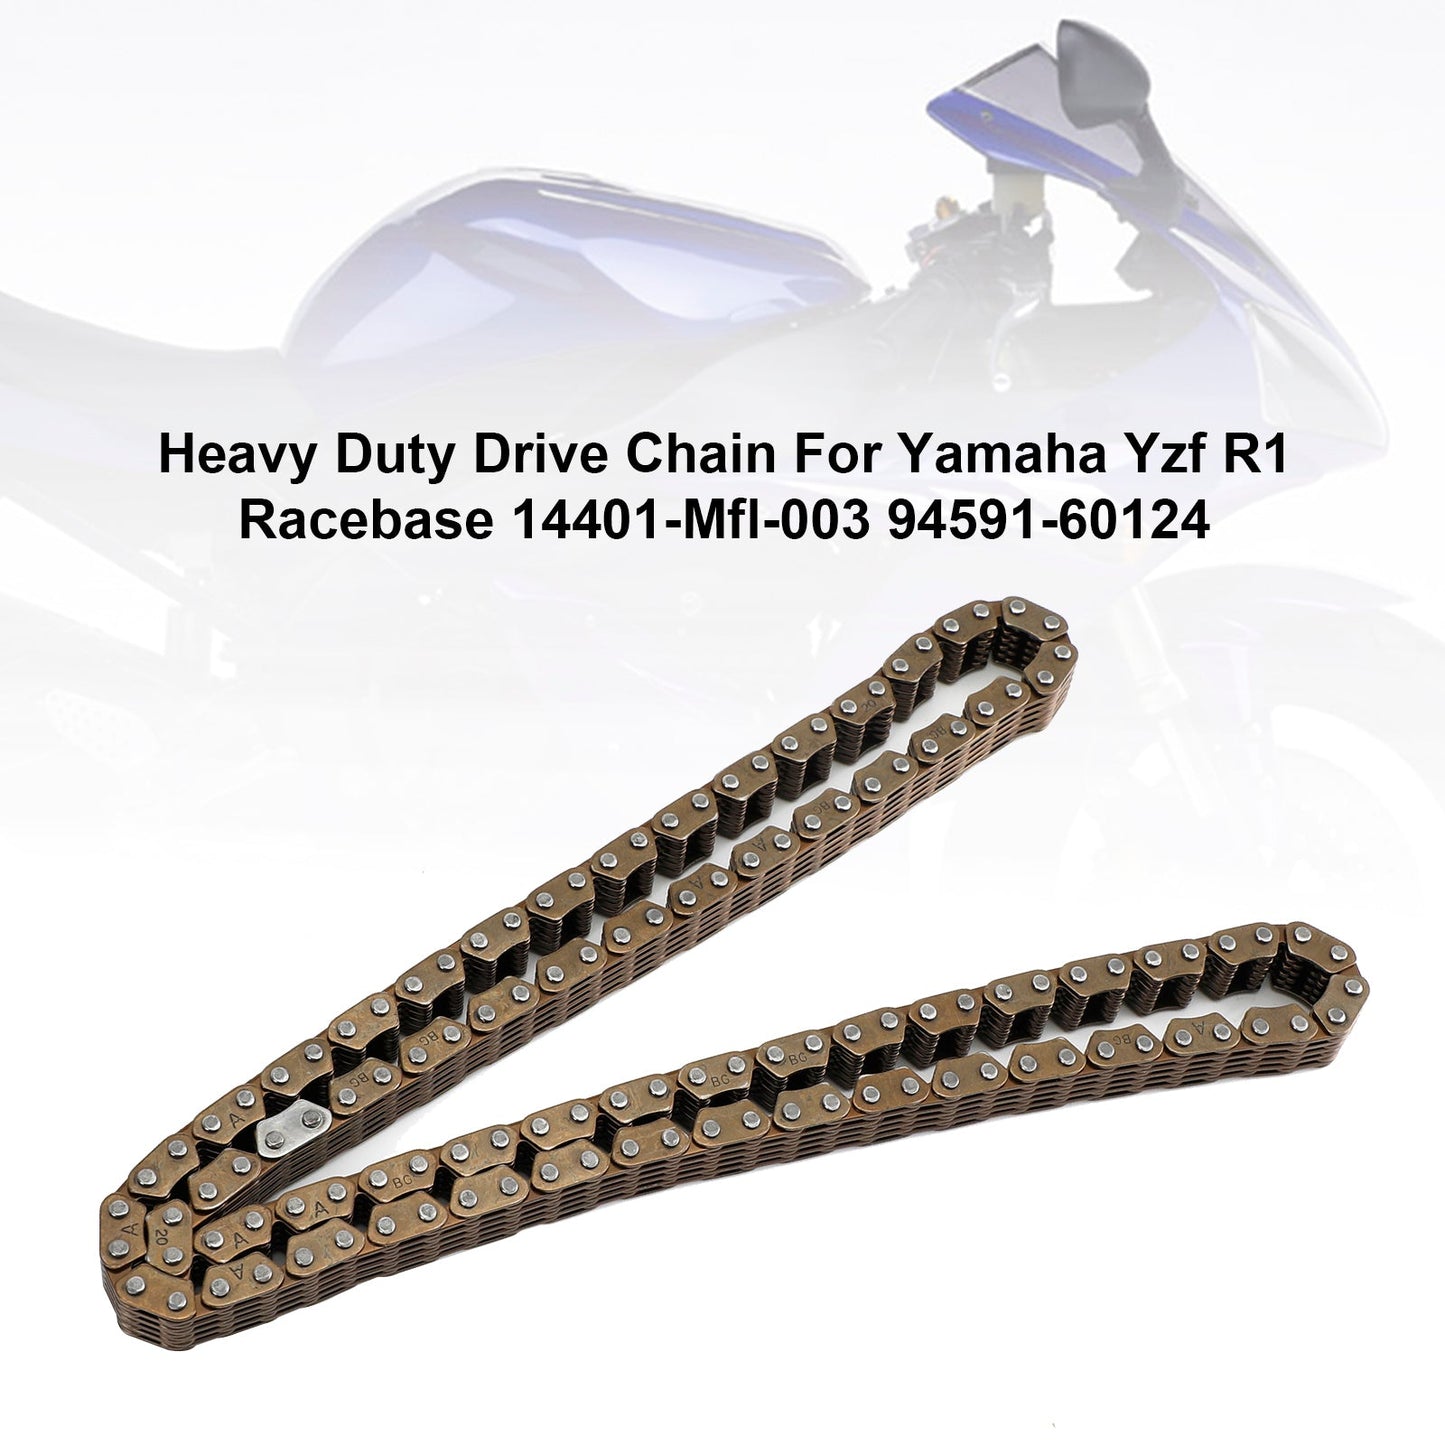 New Heavy Duty Drive Chain For Yamaha Yzf R1 Racebase 14401-Mfl-003 94591-60124